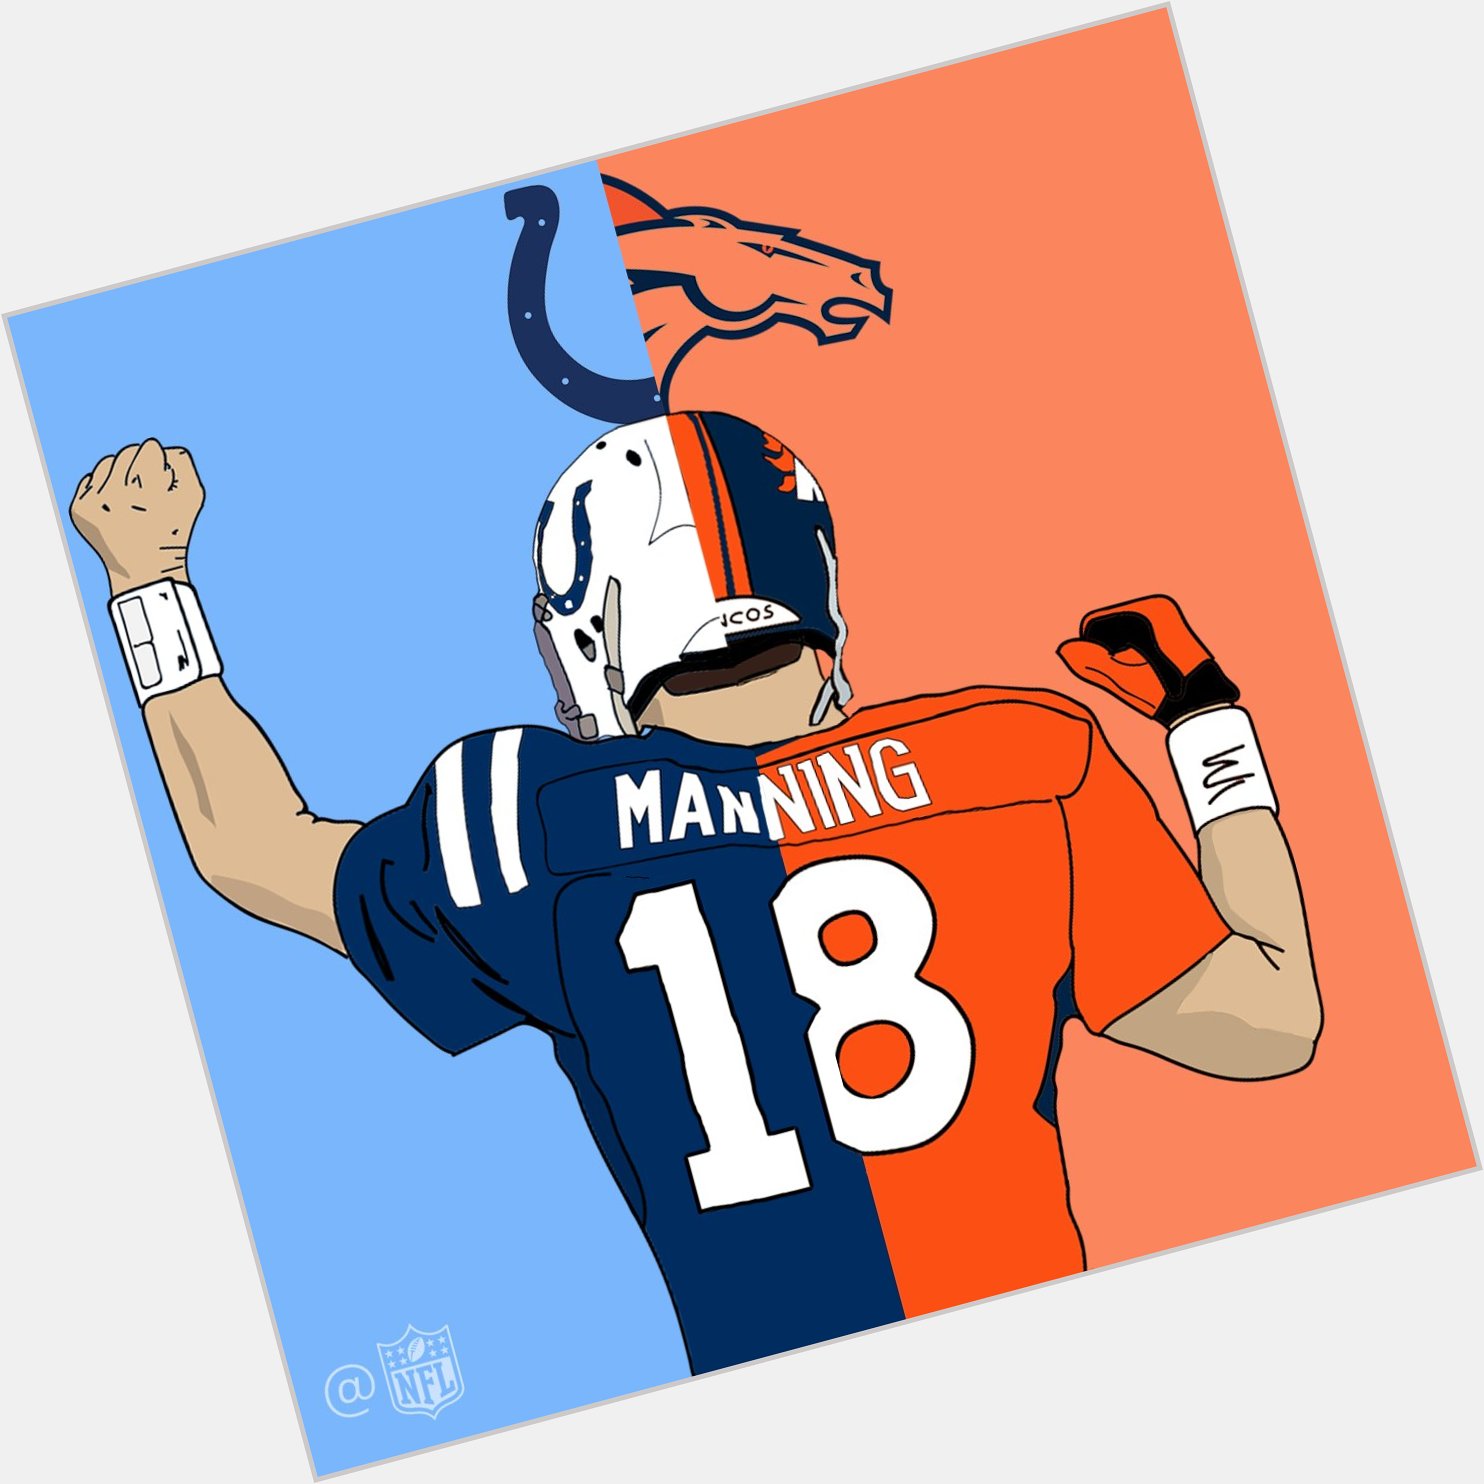 2x Super Bowl champ.
5x MVP.
14x Pro Bowler.

Everyone wish Peyton Manning a happy birthday! 